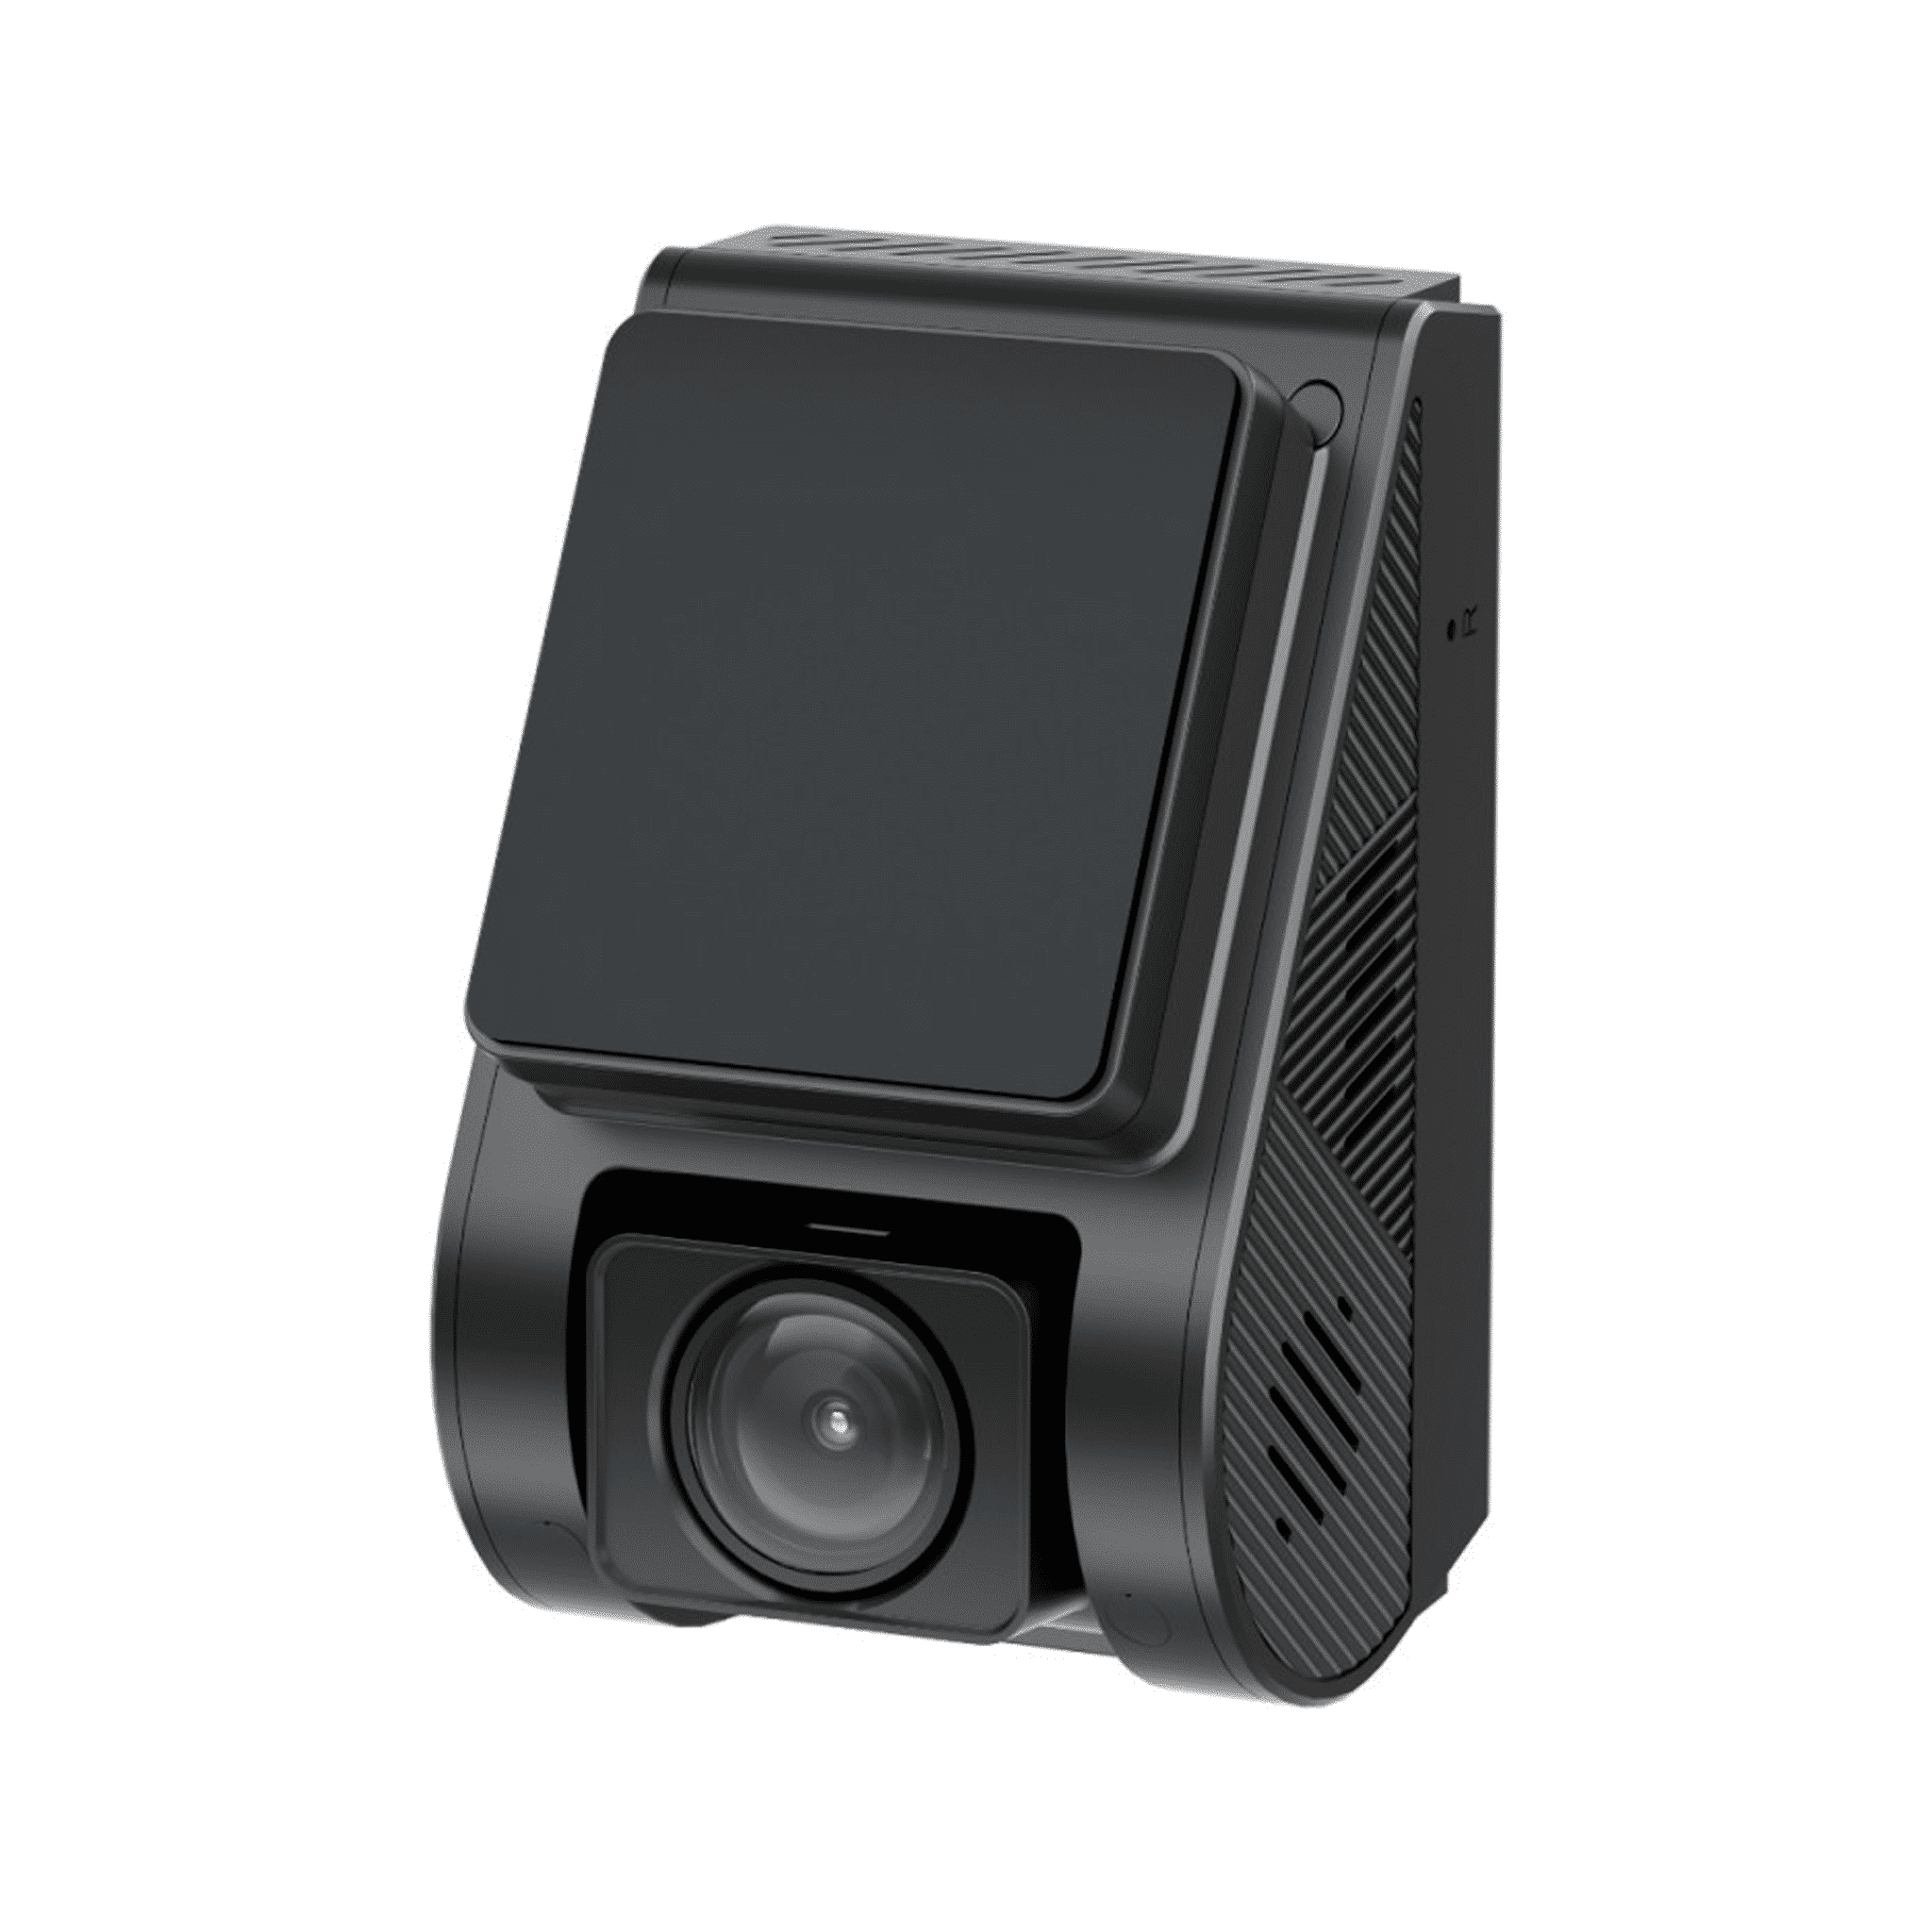 VIOFO A119 MINI 2 1440p Araç Kamerası | aksesuarlarla